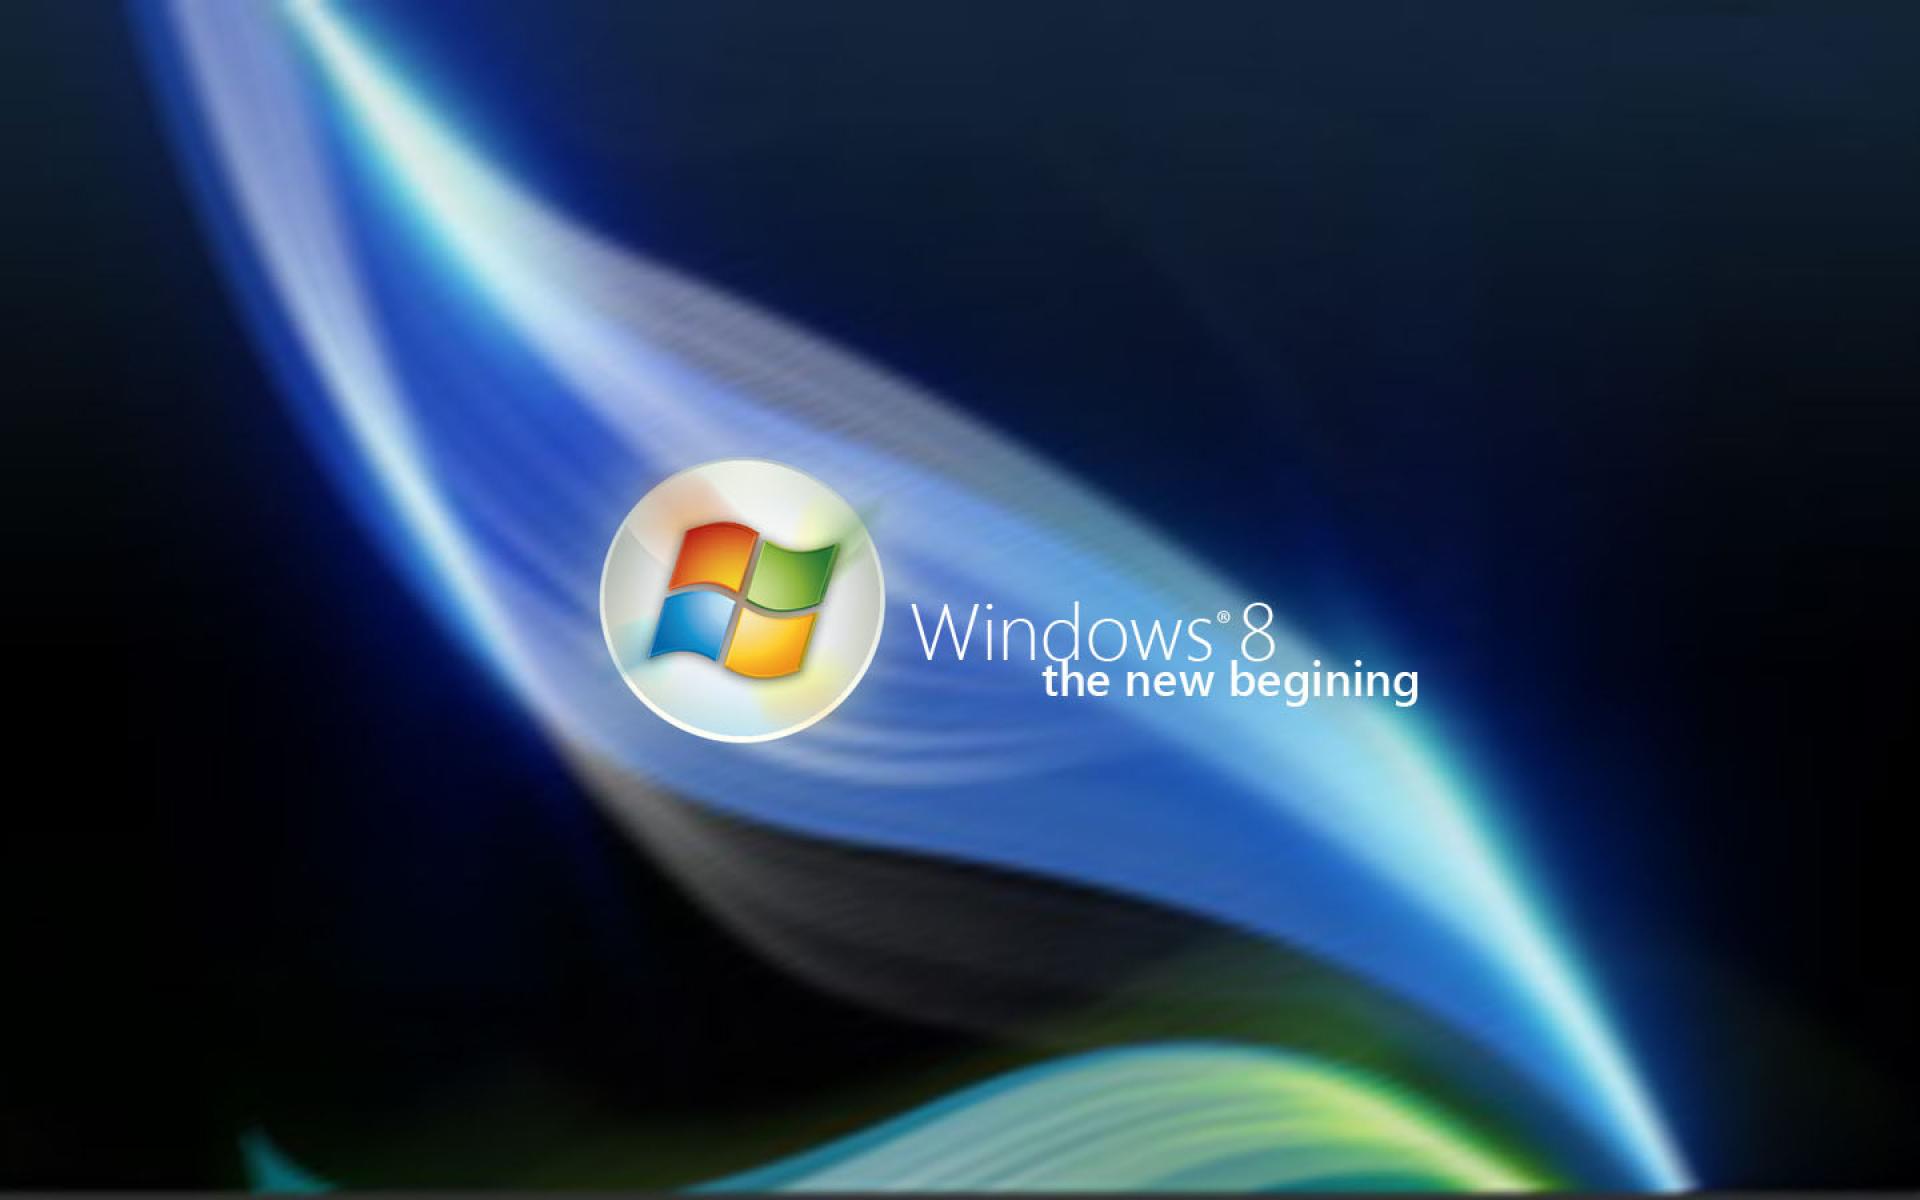 Windows 8 Free Wallpaper Download No91109 Windows8をテーマにした壁紙画像 Naver まとめ